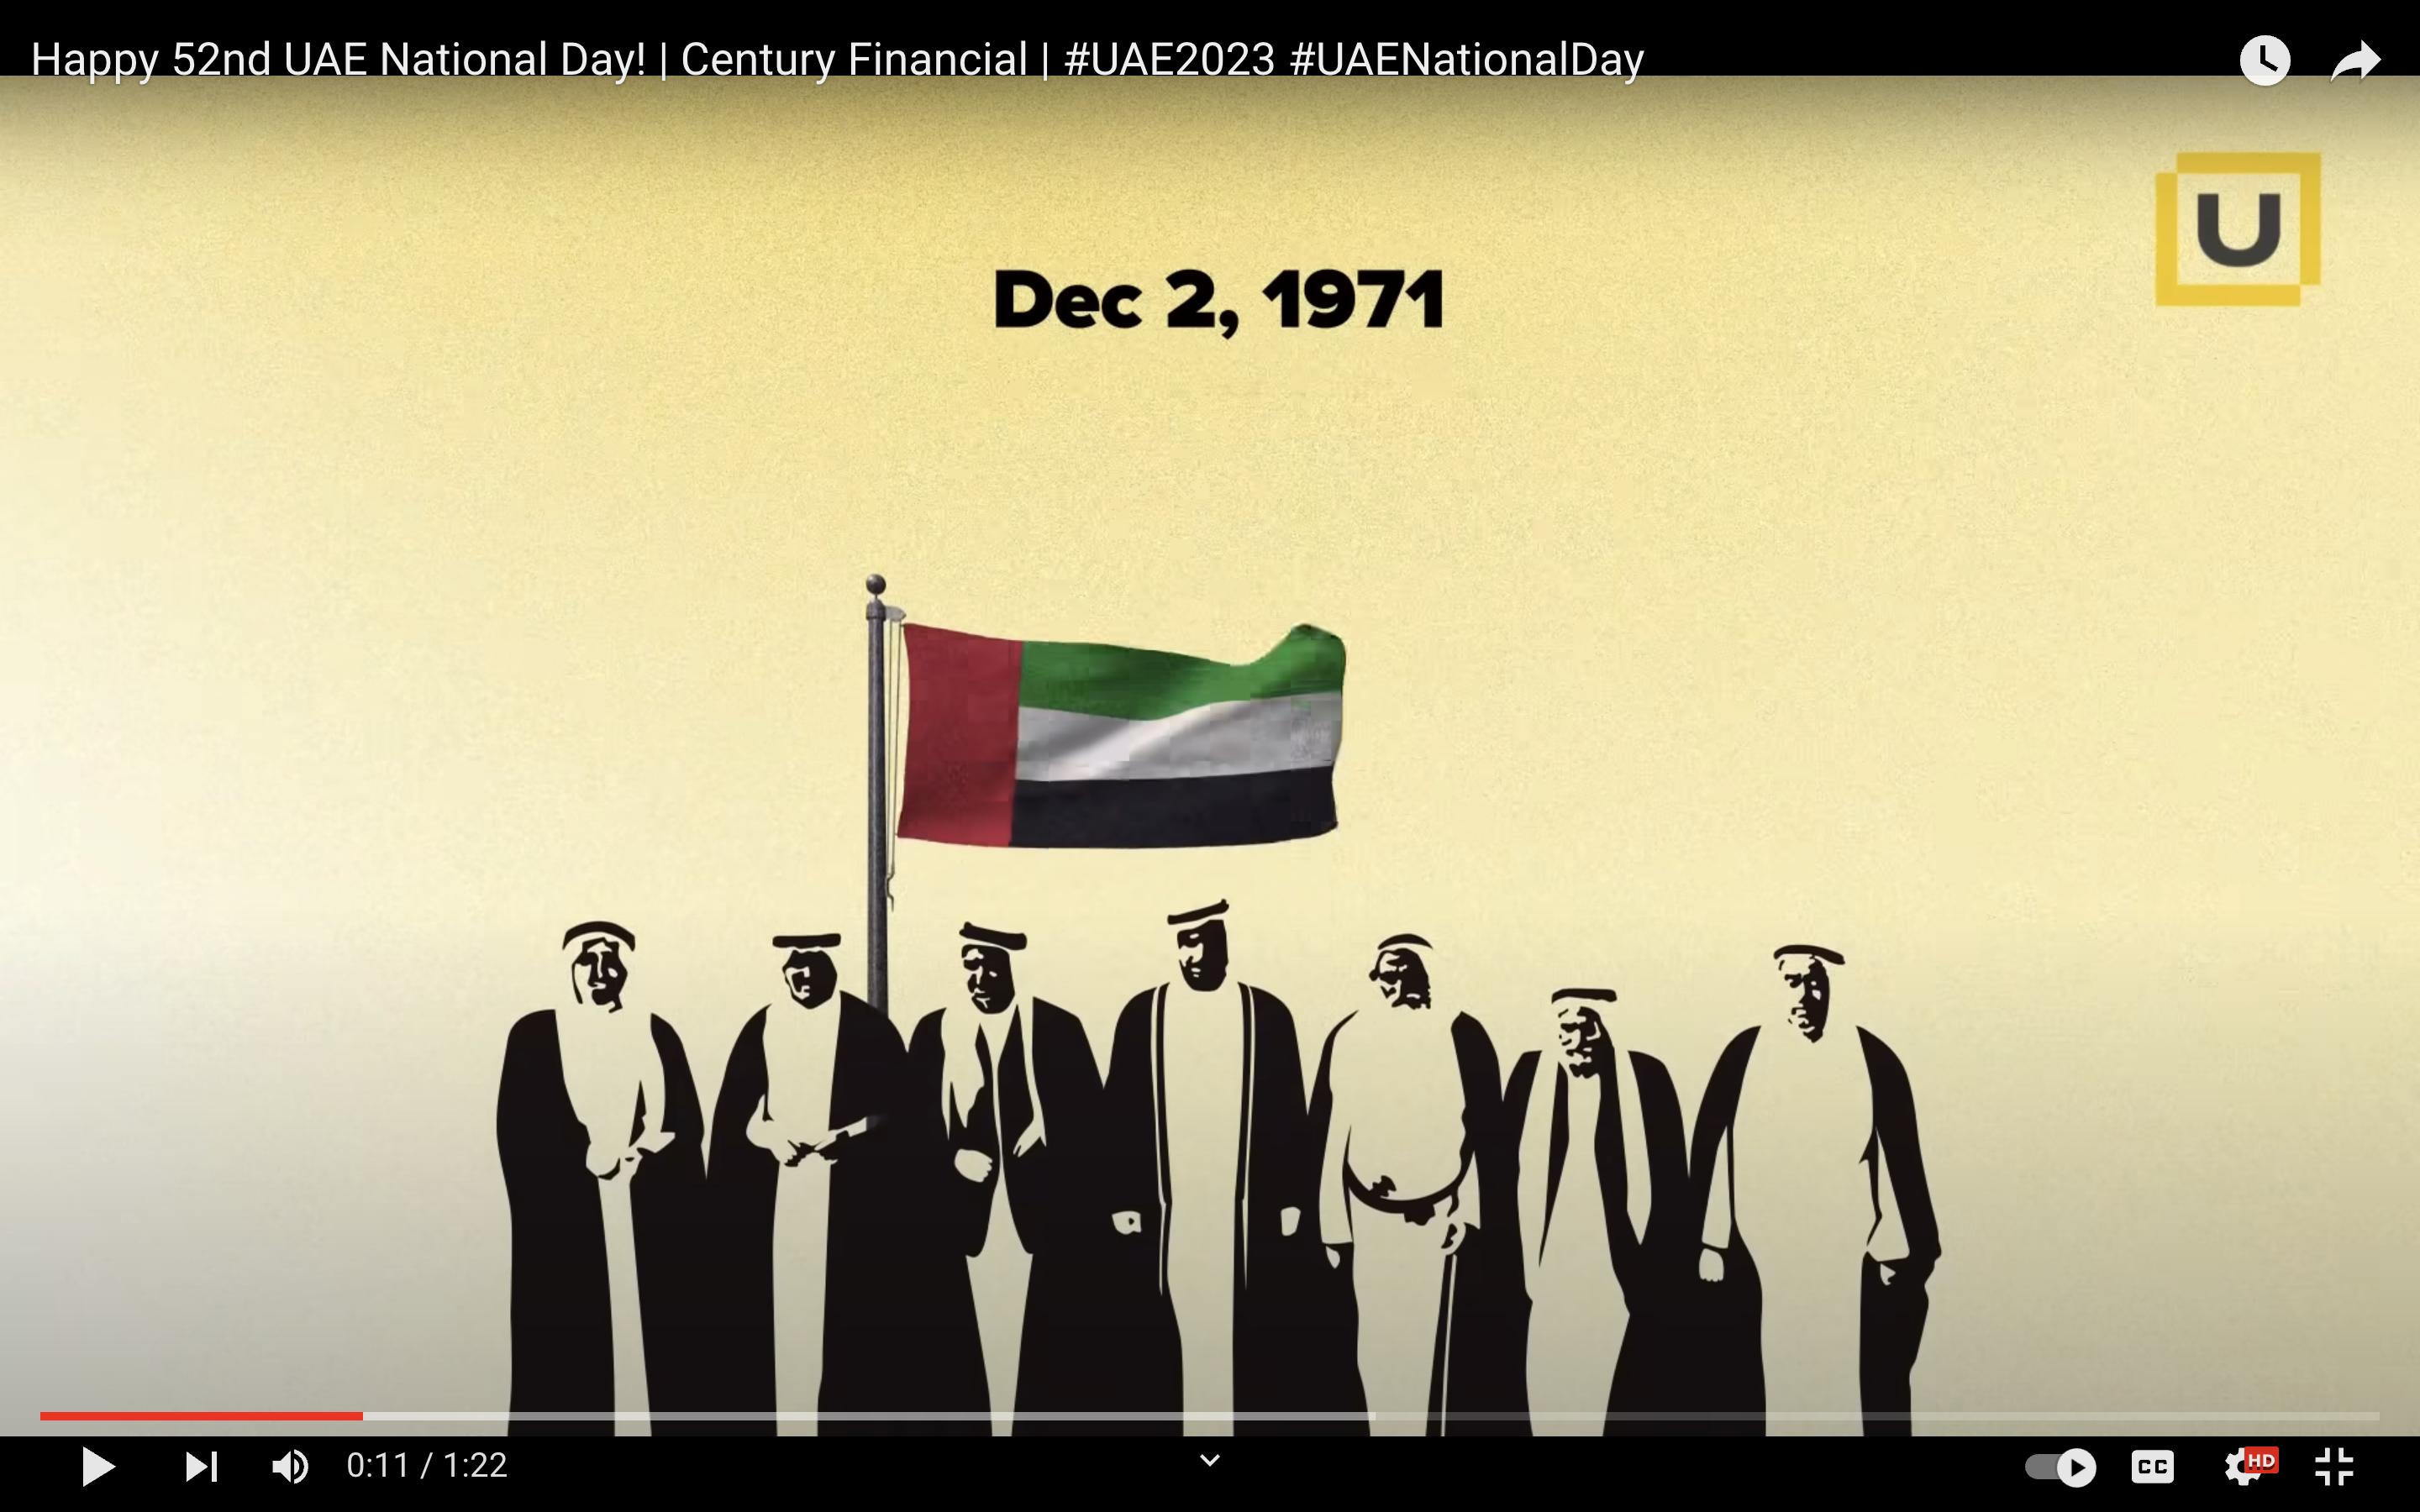 [VIDEO SCRIPT] Celebrating 52nd UAE National Day – Century Financial Dubai